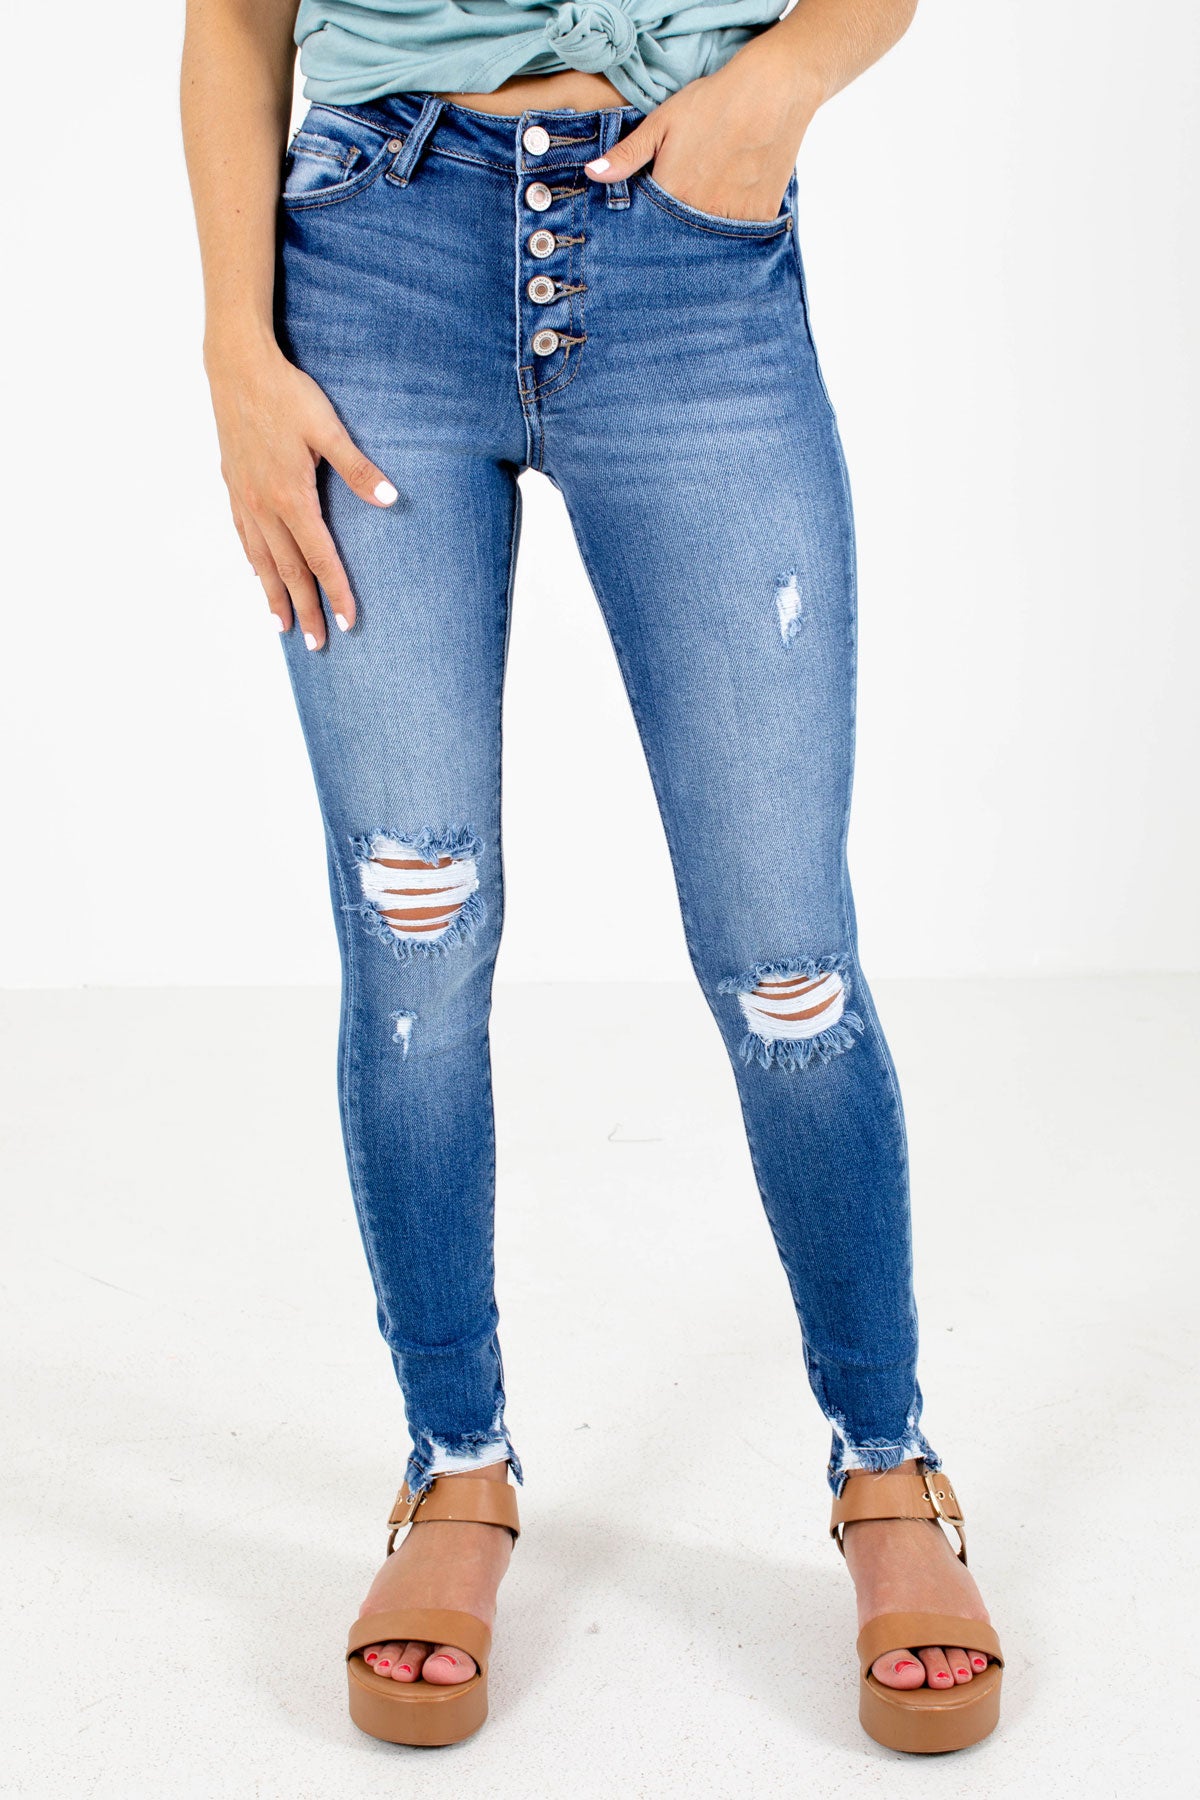 Blue KanCan Brand Boutique Skinny Jeans for Women